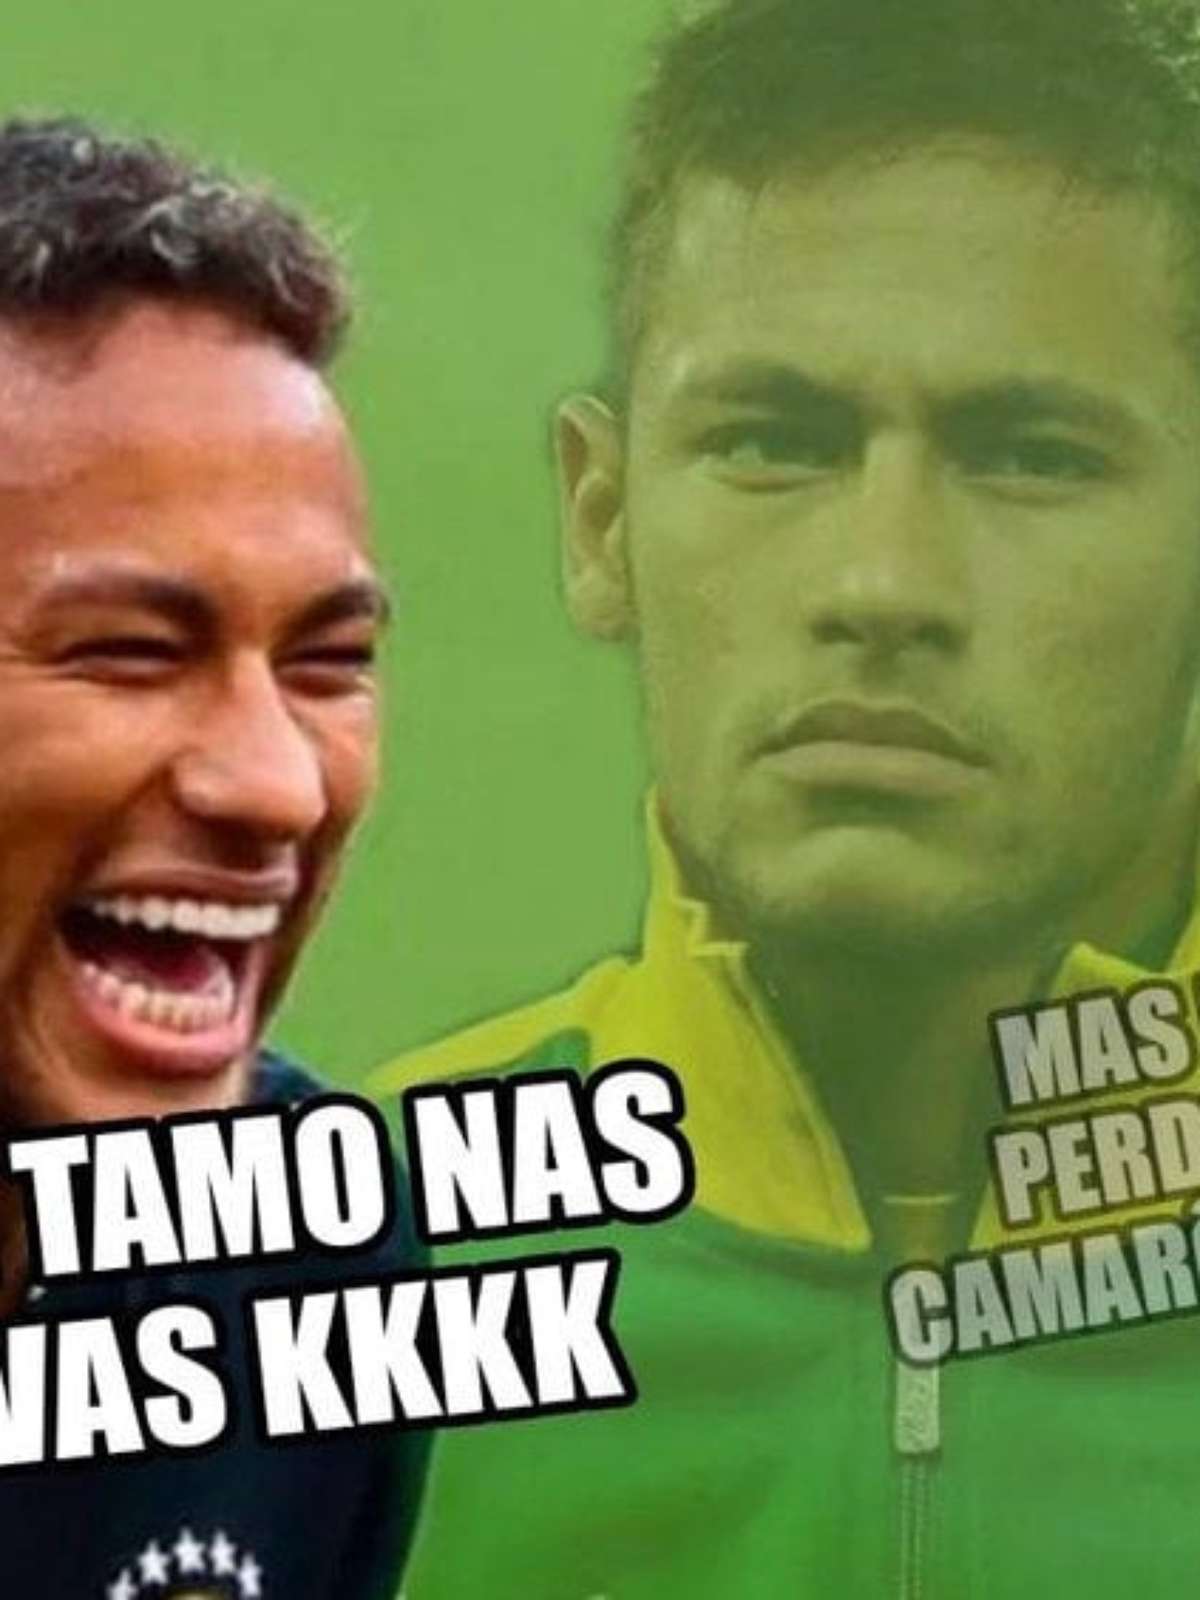 Os memes do jogo Brasil x Camarões #shorts